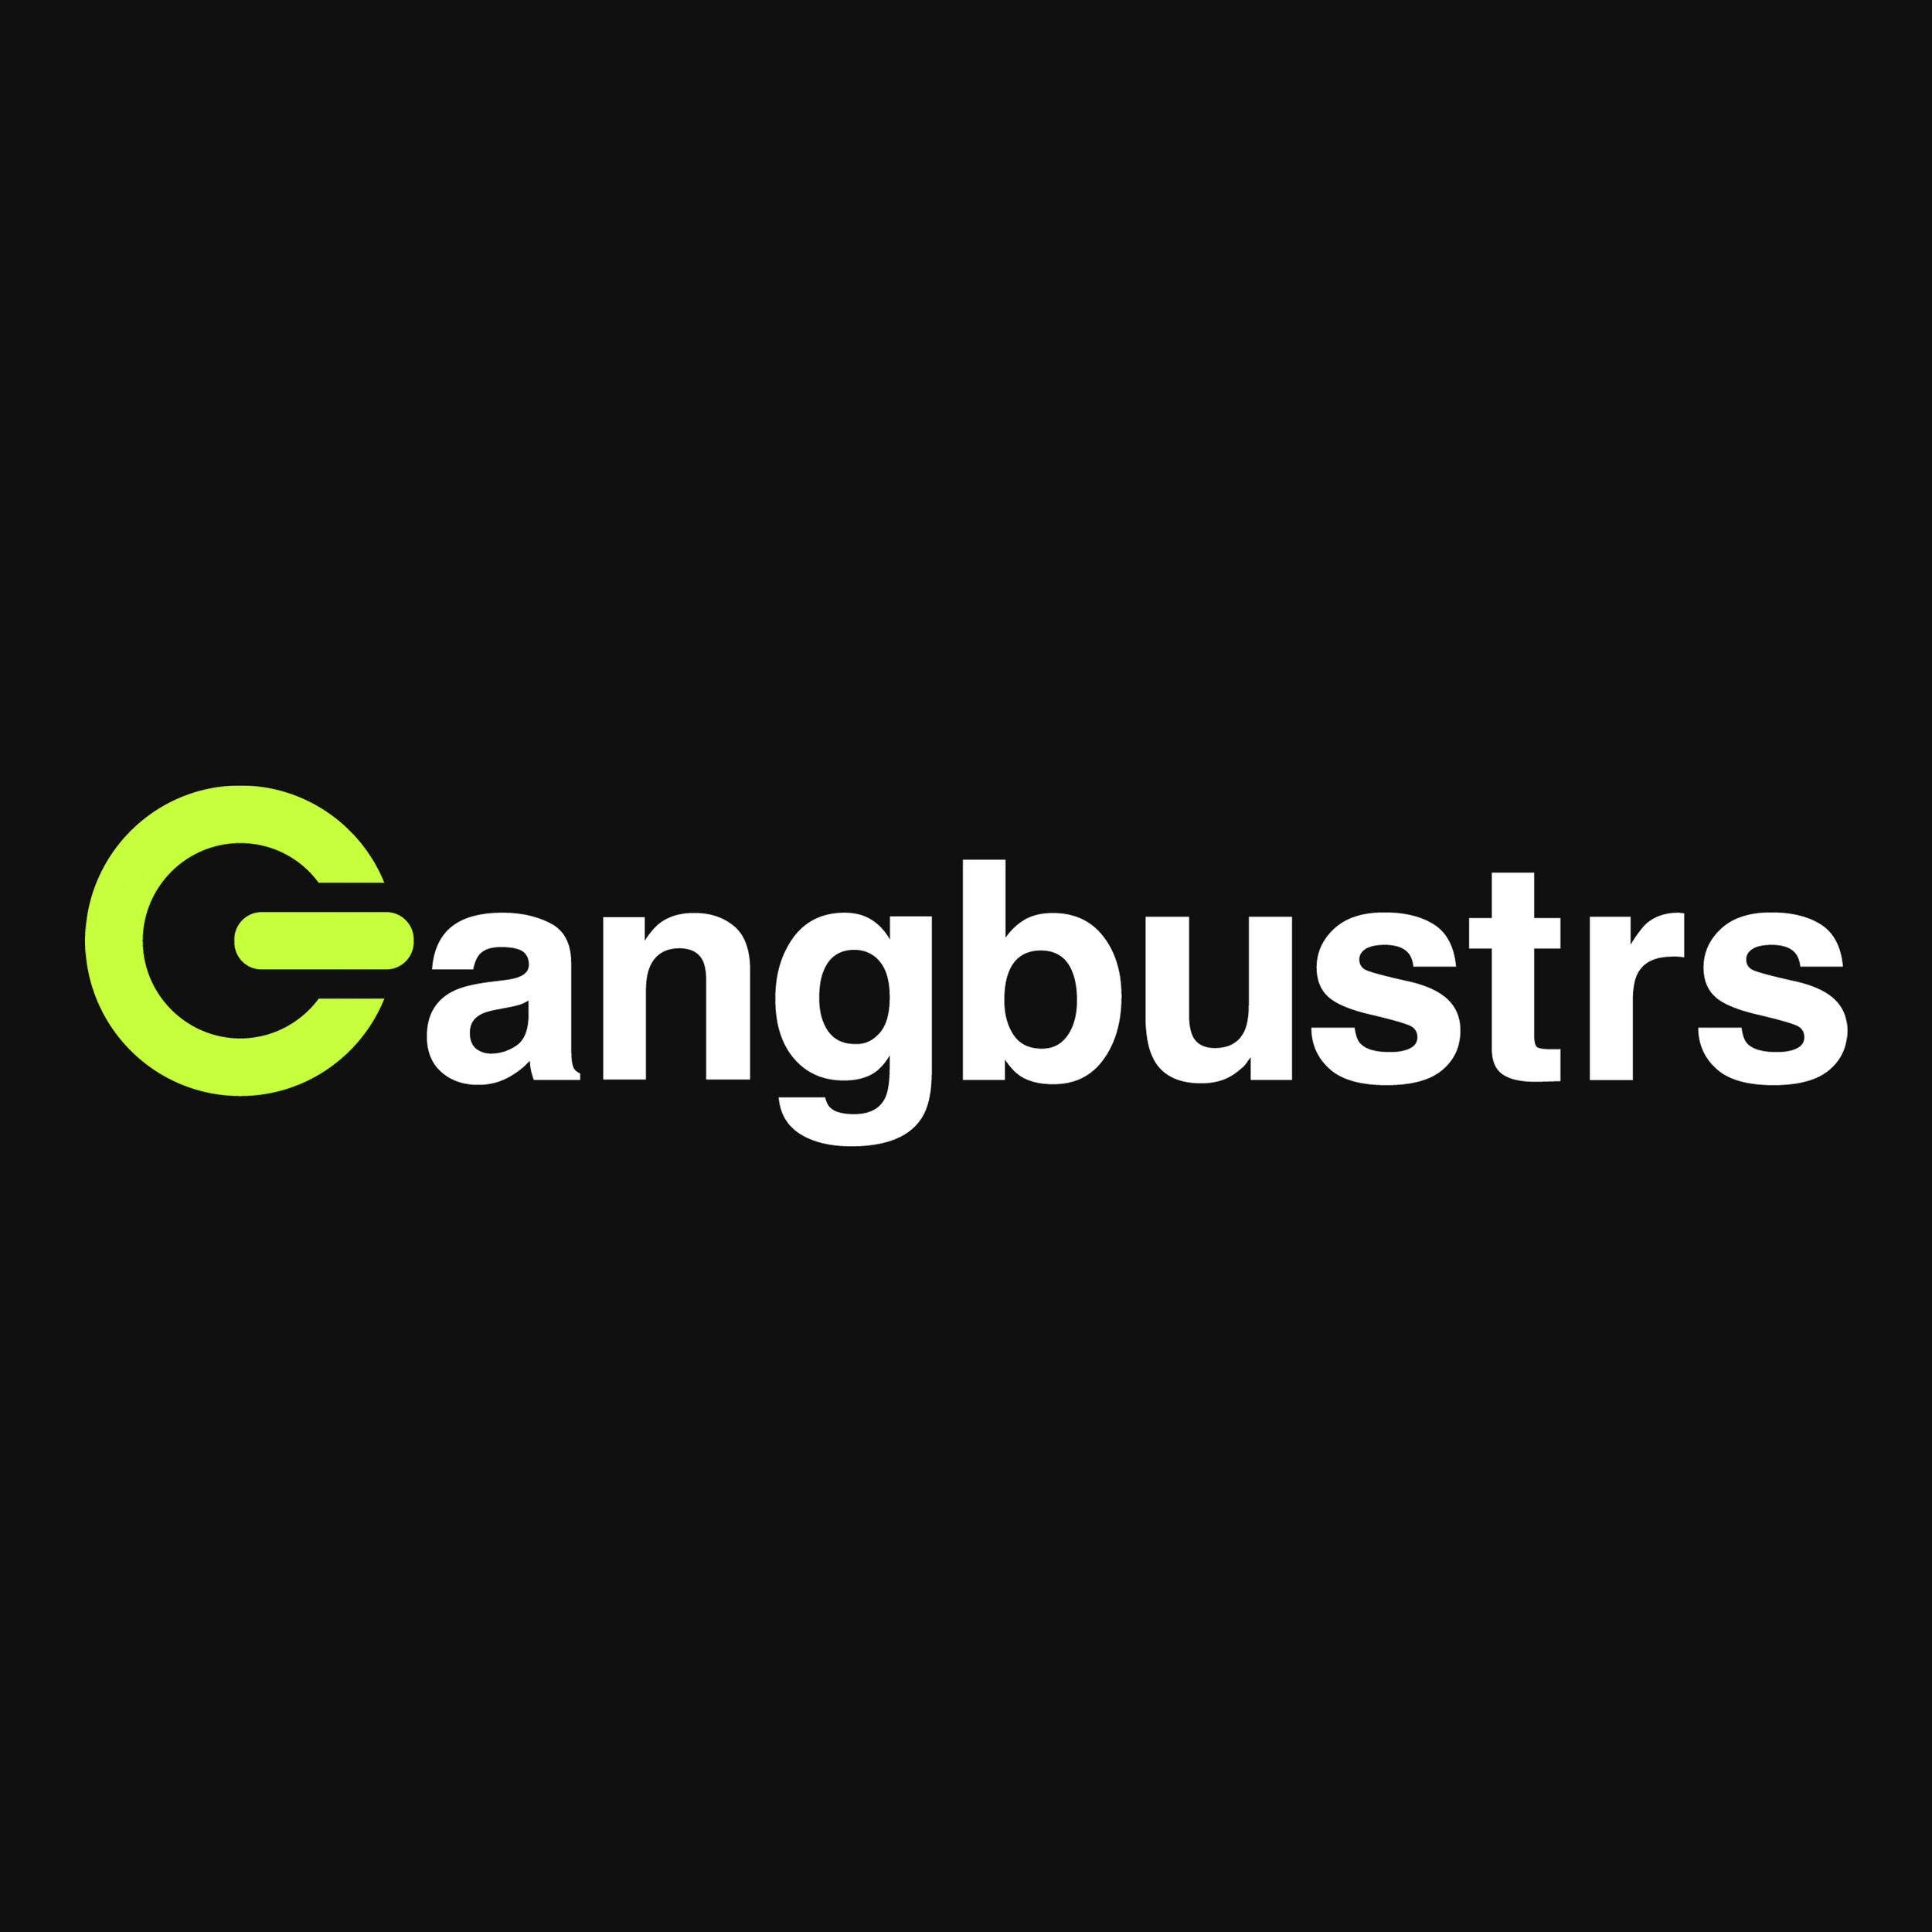 kim_wright_gangbustrs_logo.jpg